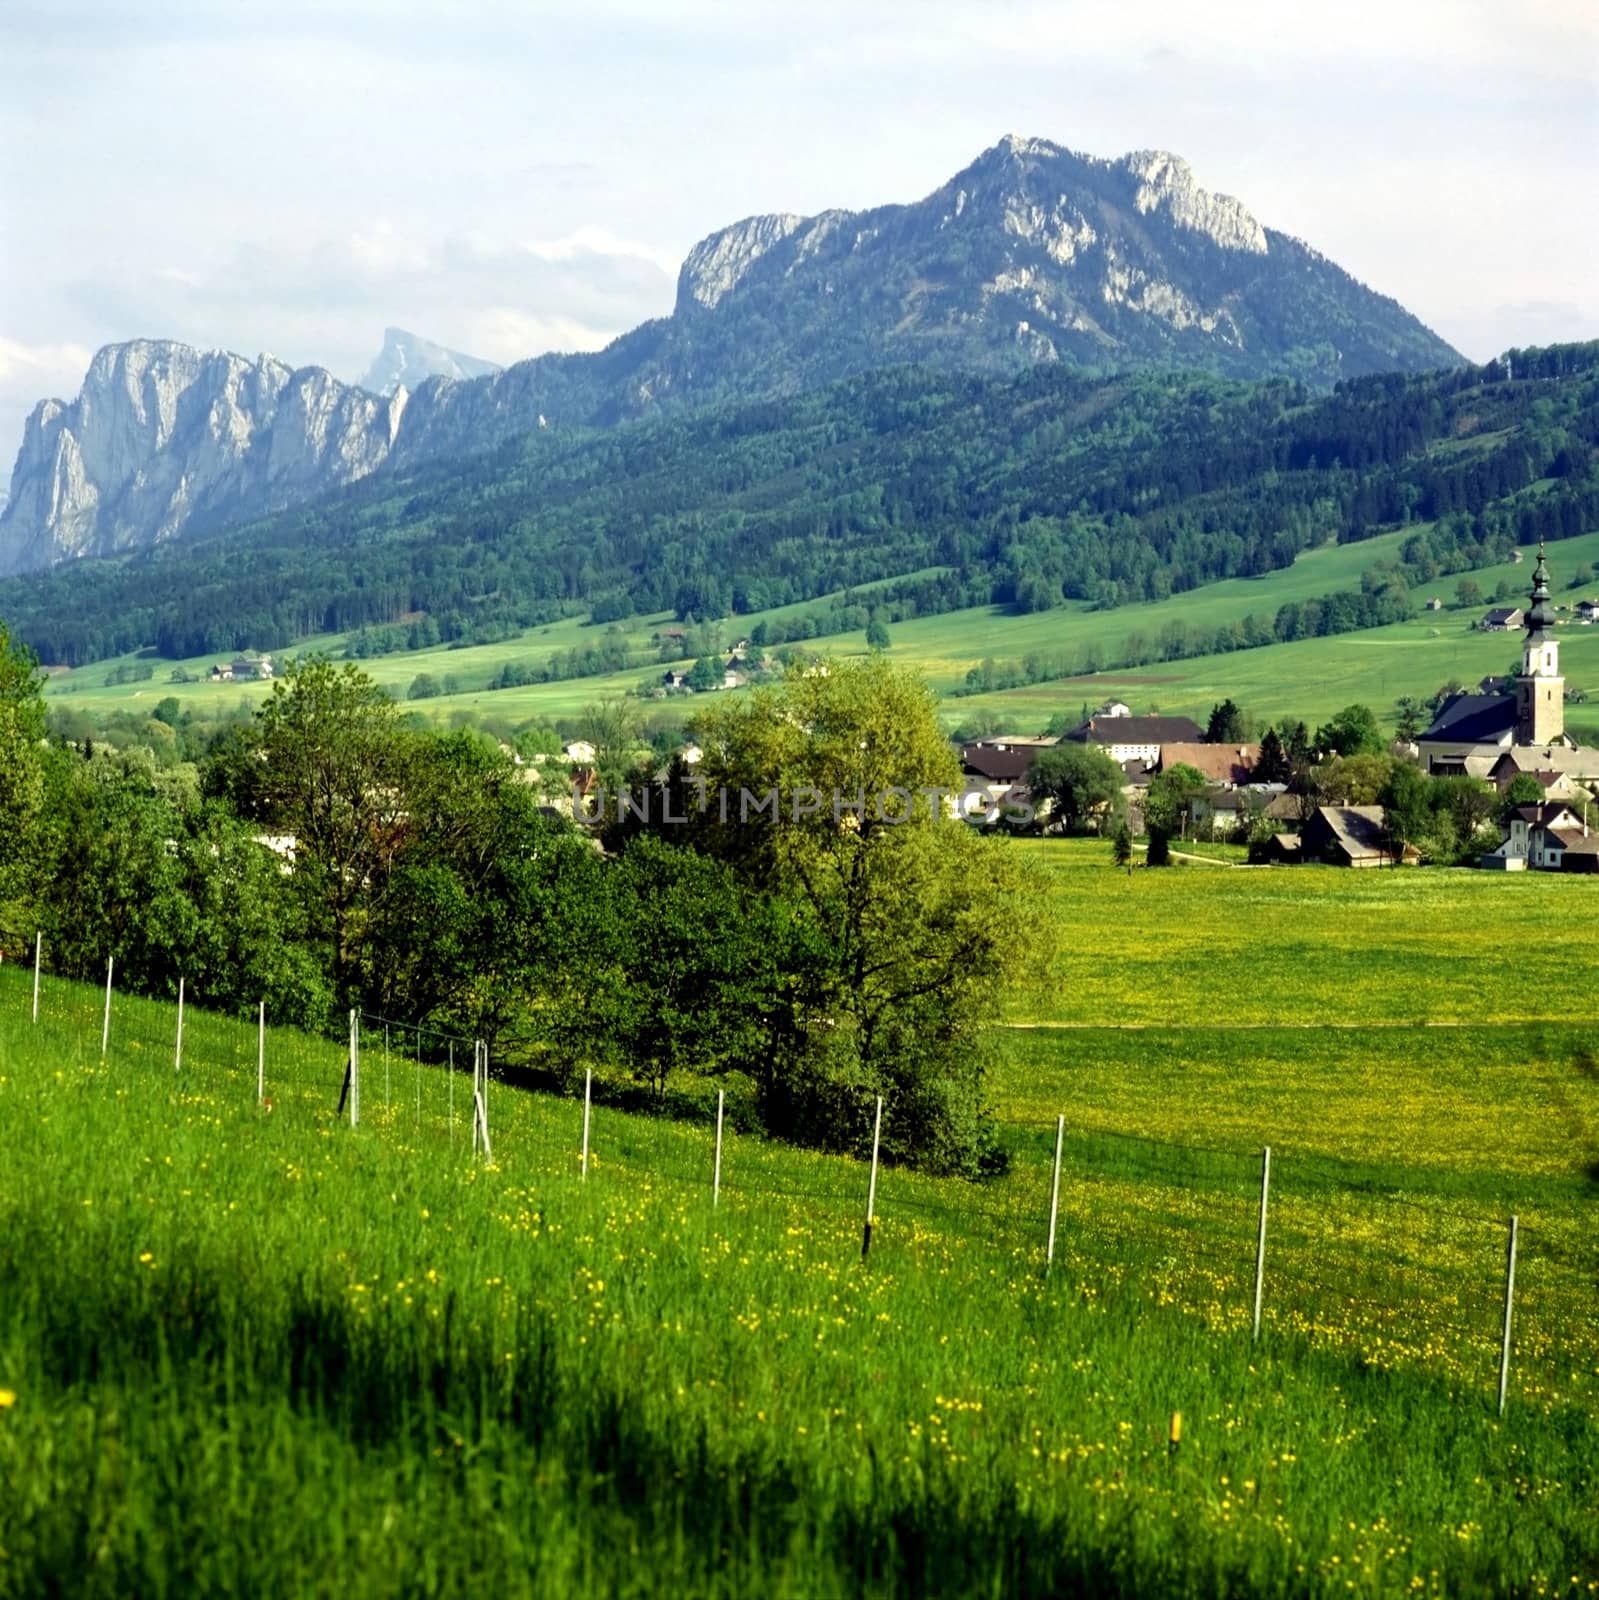 Village and landscape in Bavaria, Germany